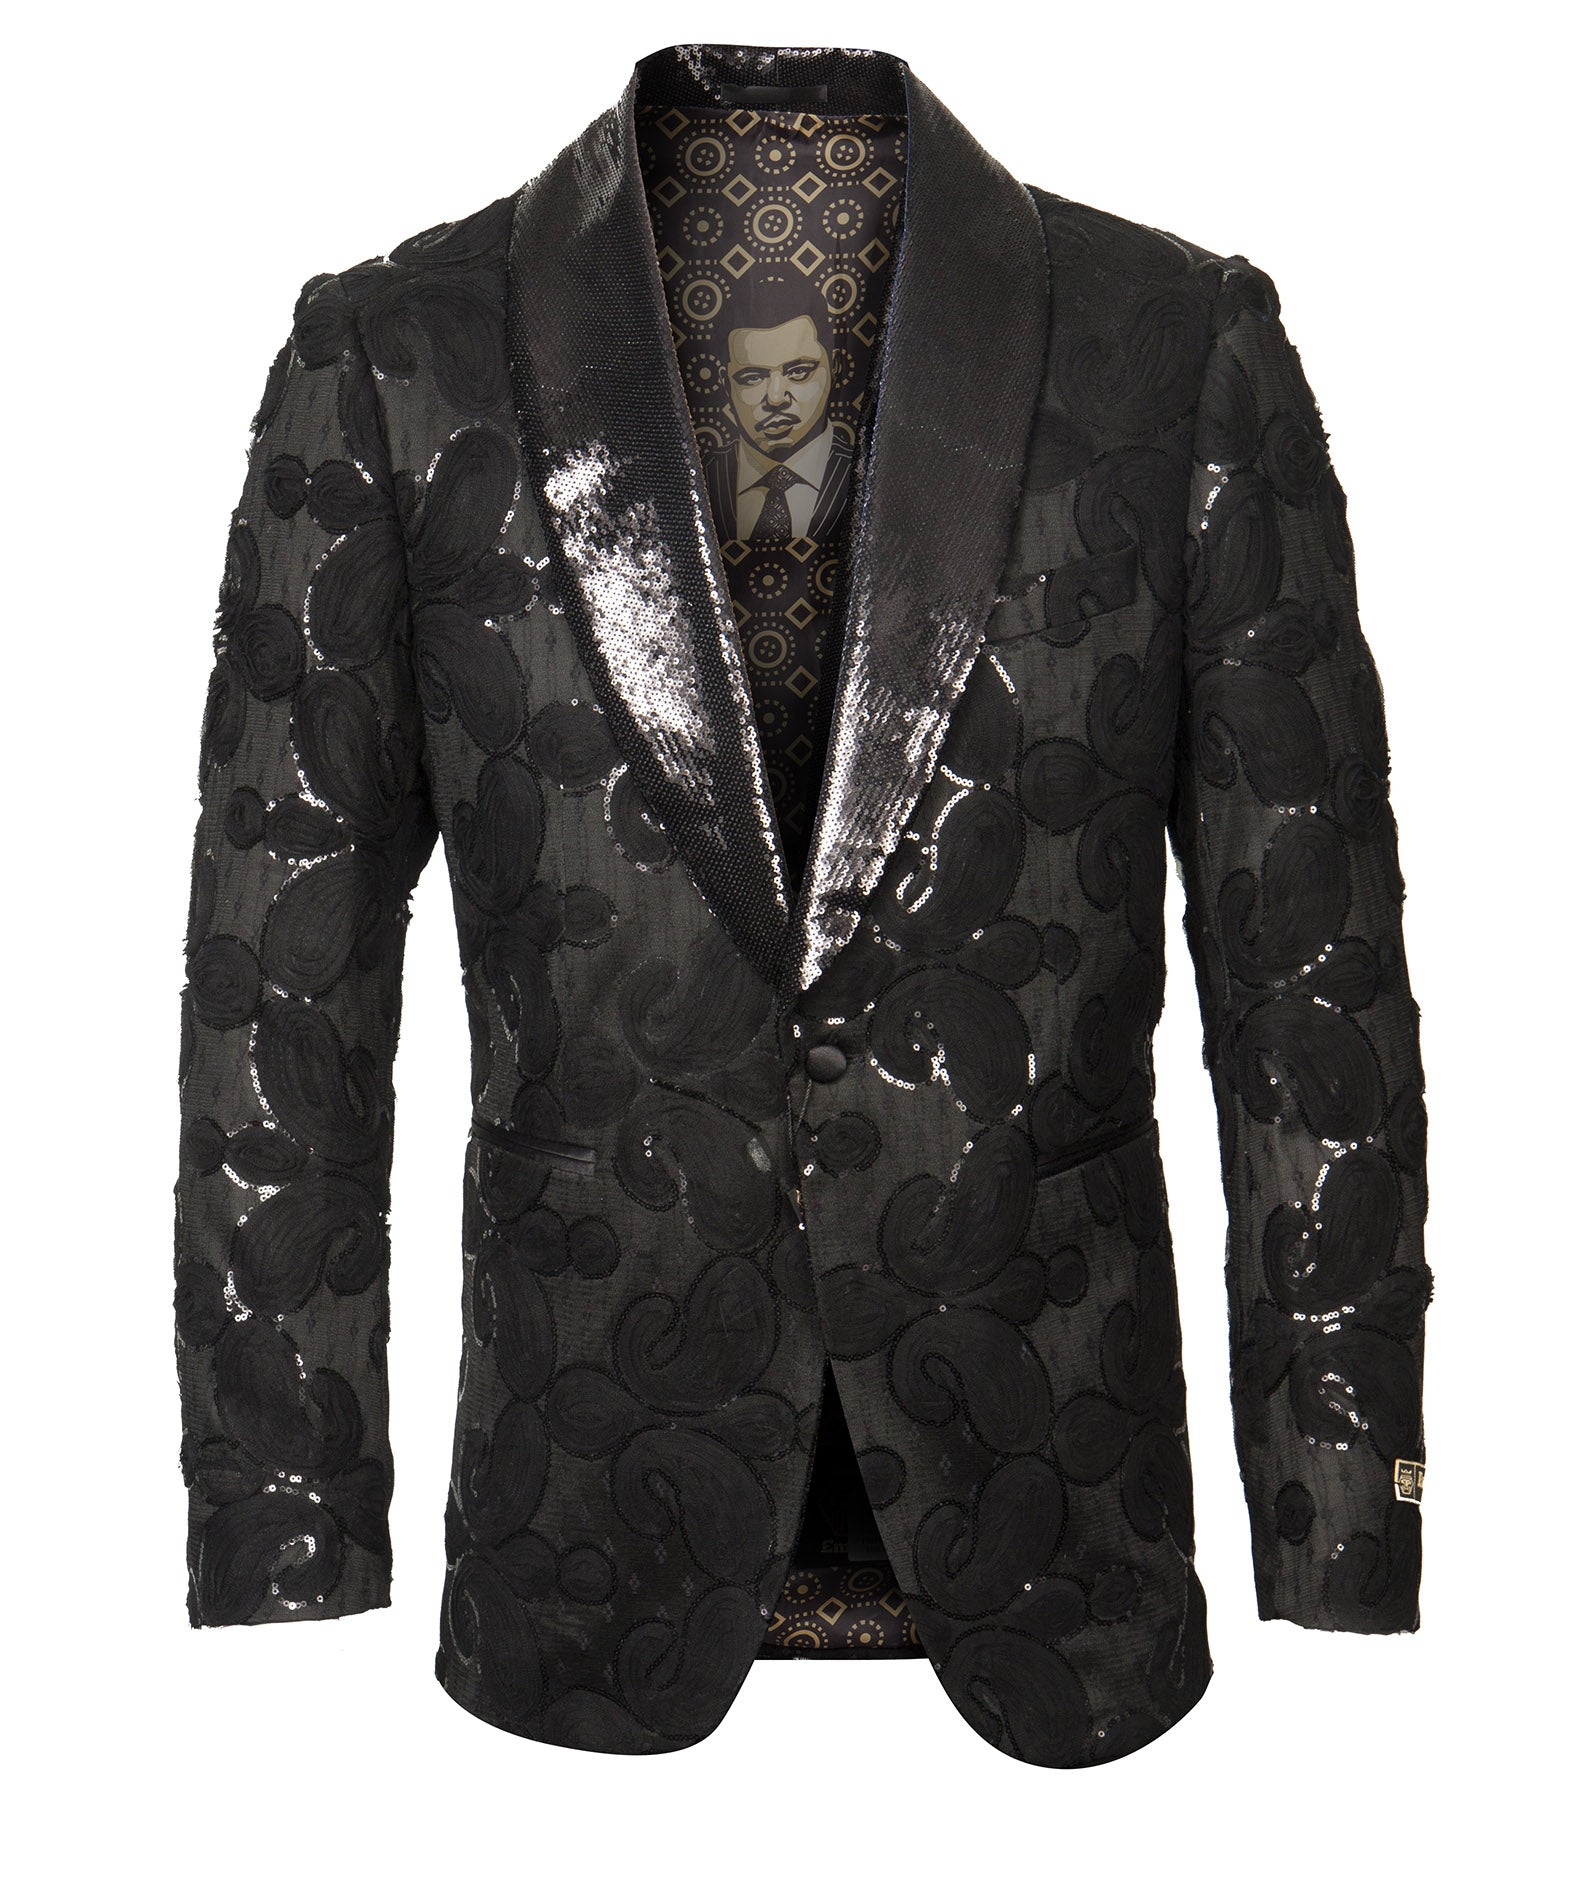 Black Empire Show Blazers Formal Dinner Suit Jackets For Men ME275H-01